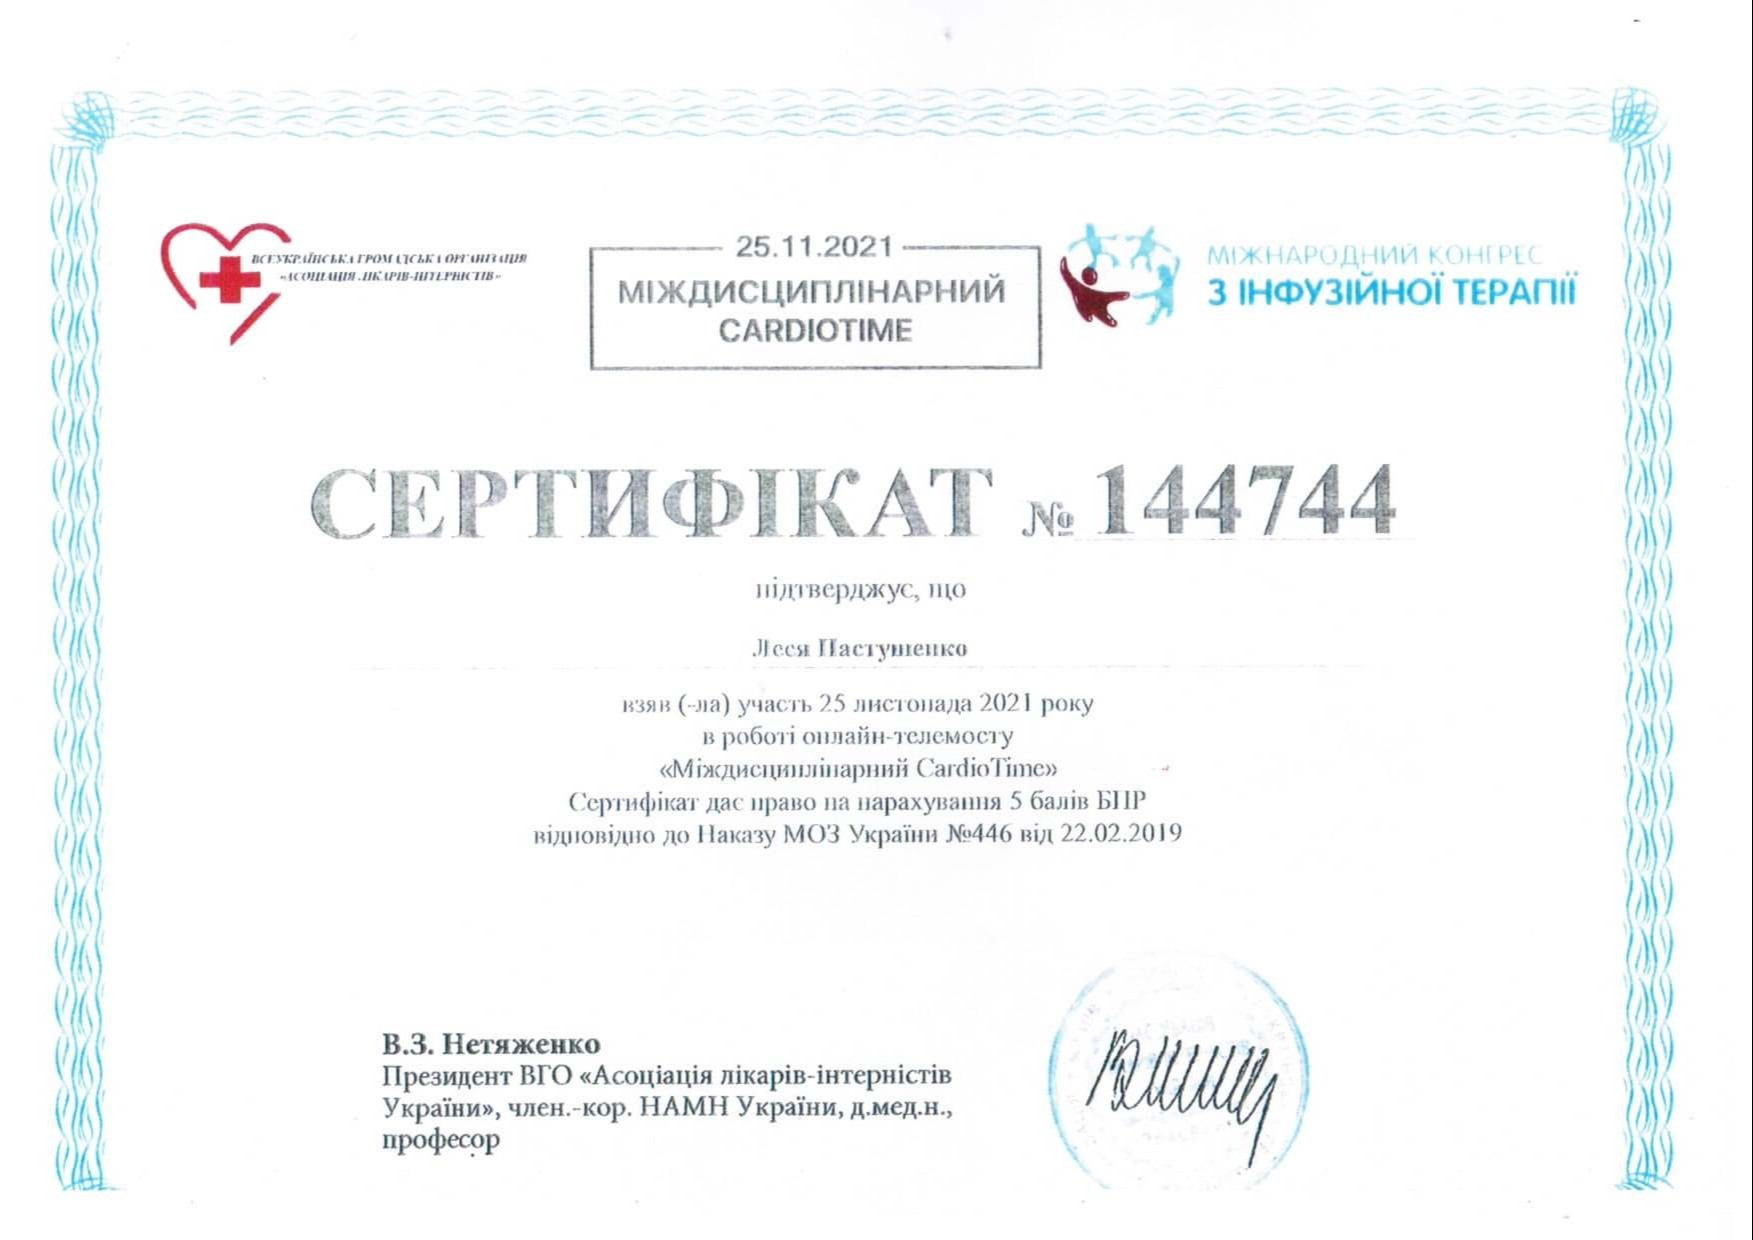 Сертификат об участии в работе онлайн телемоста